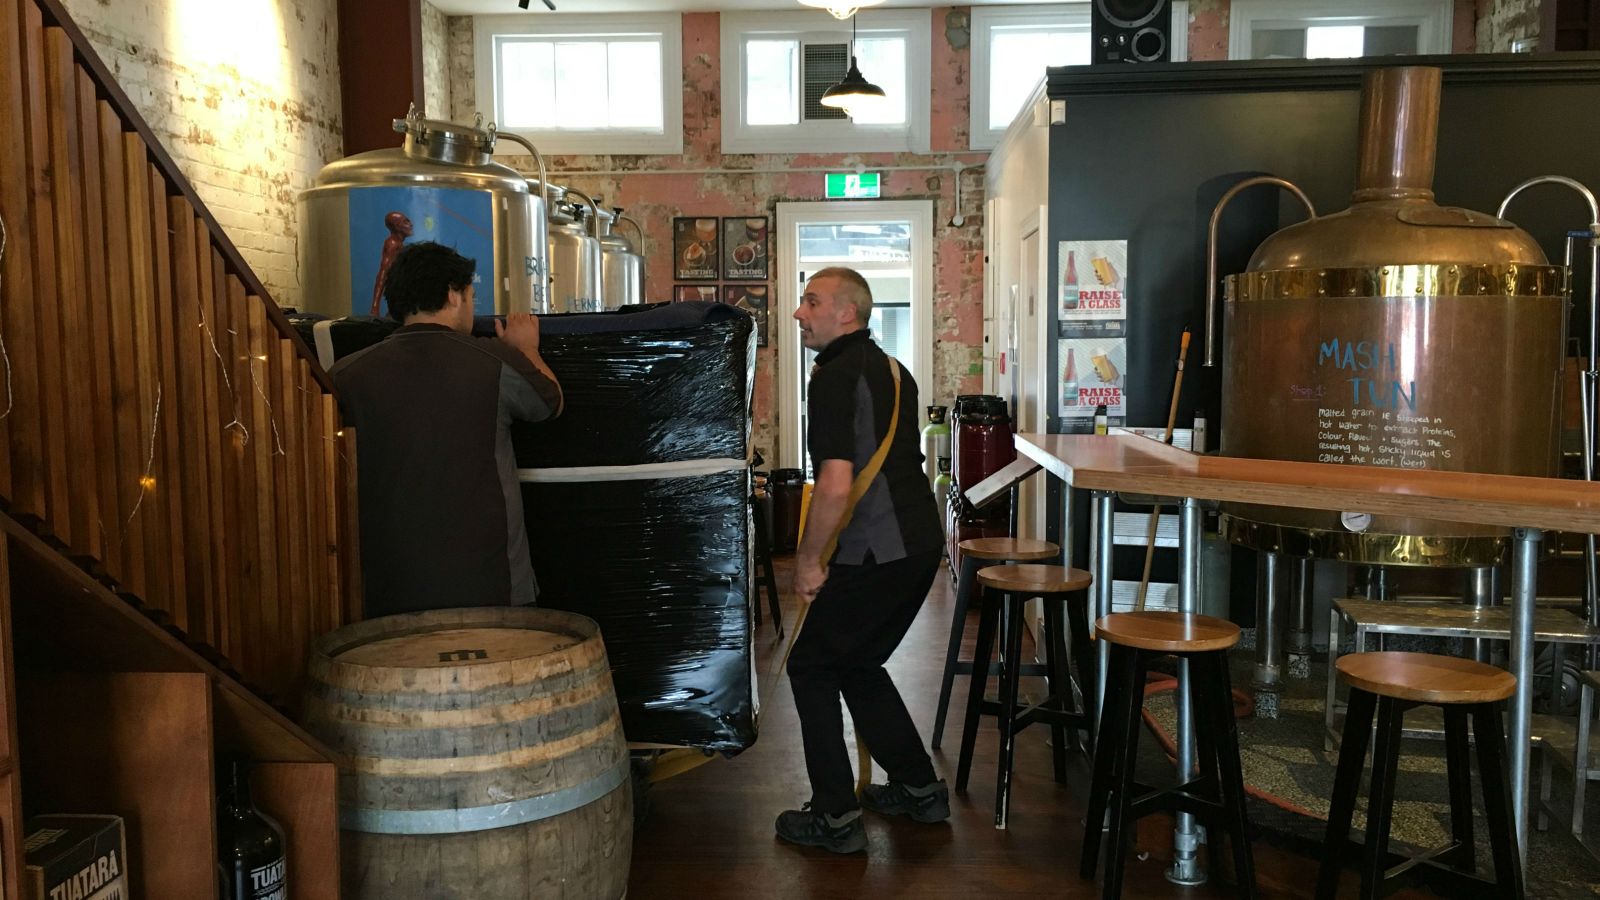 Piano movers move the NZSM piano into the Tuatara Third Eye bar.